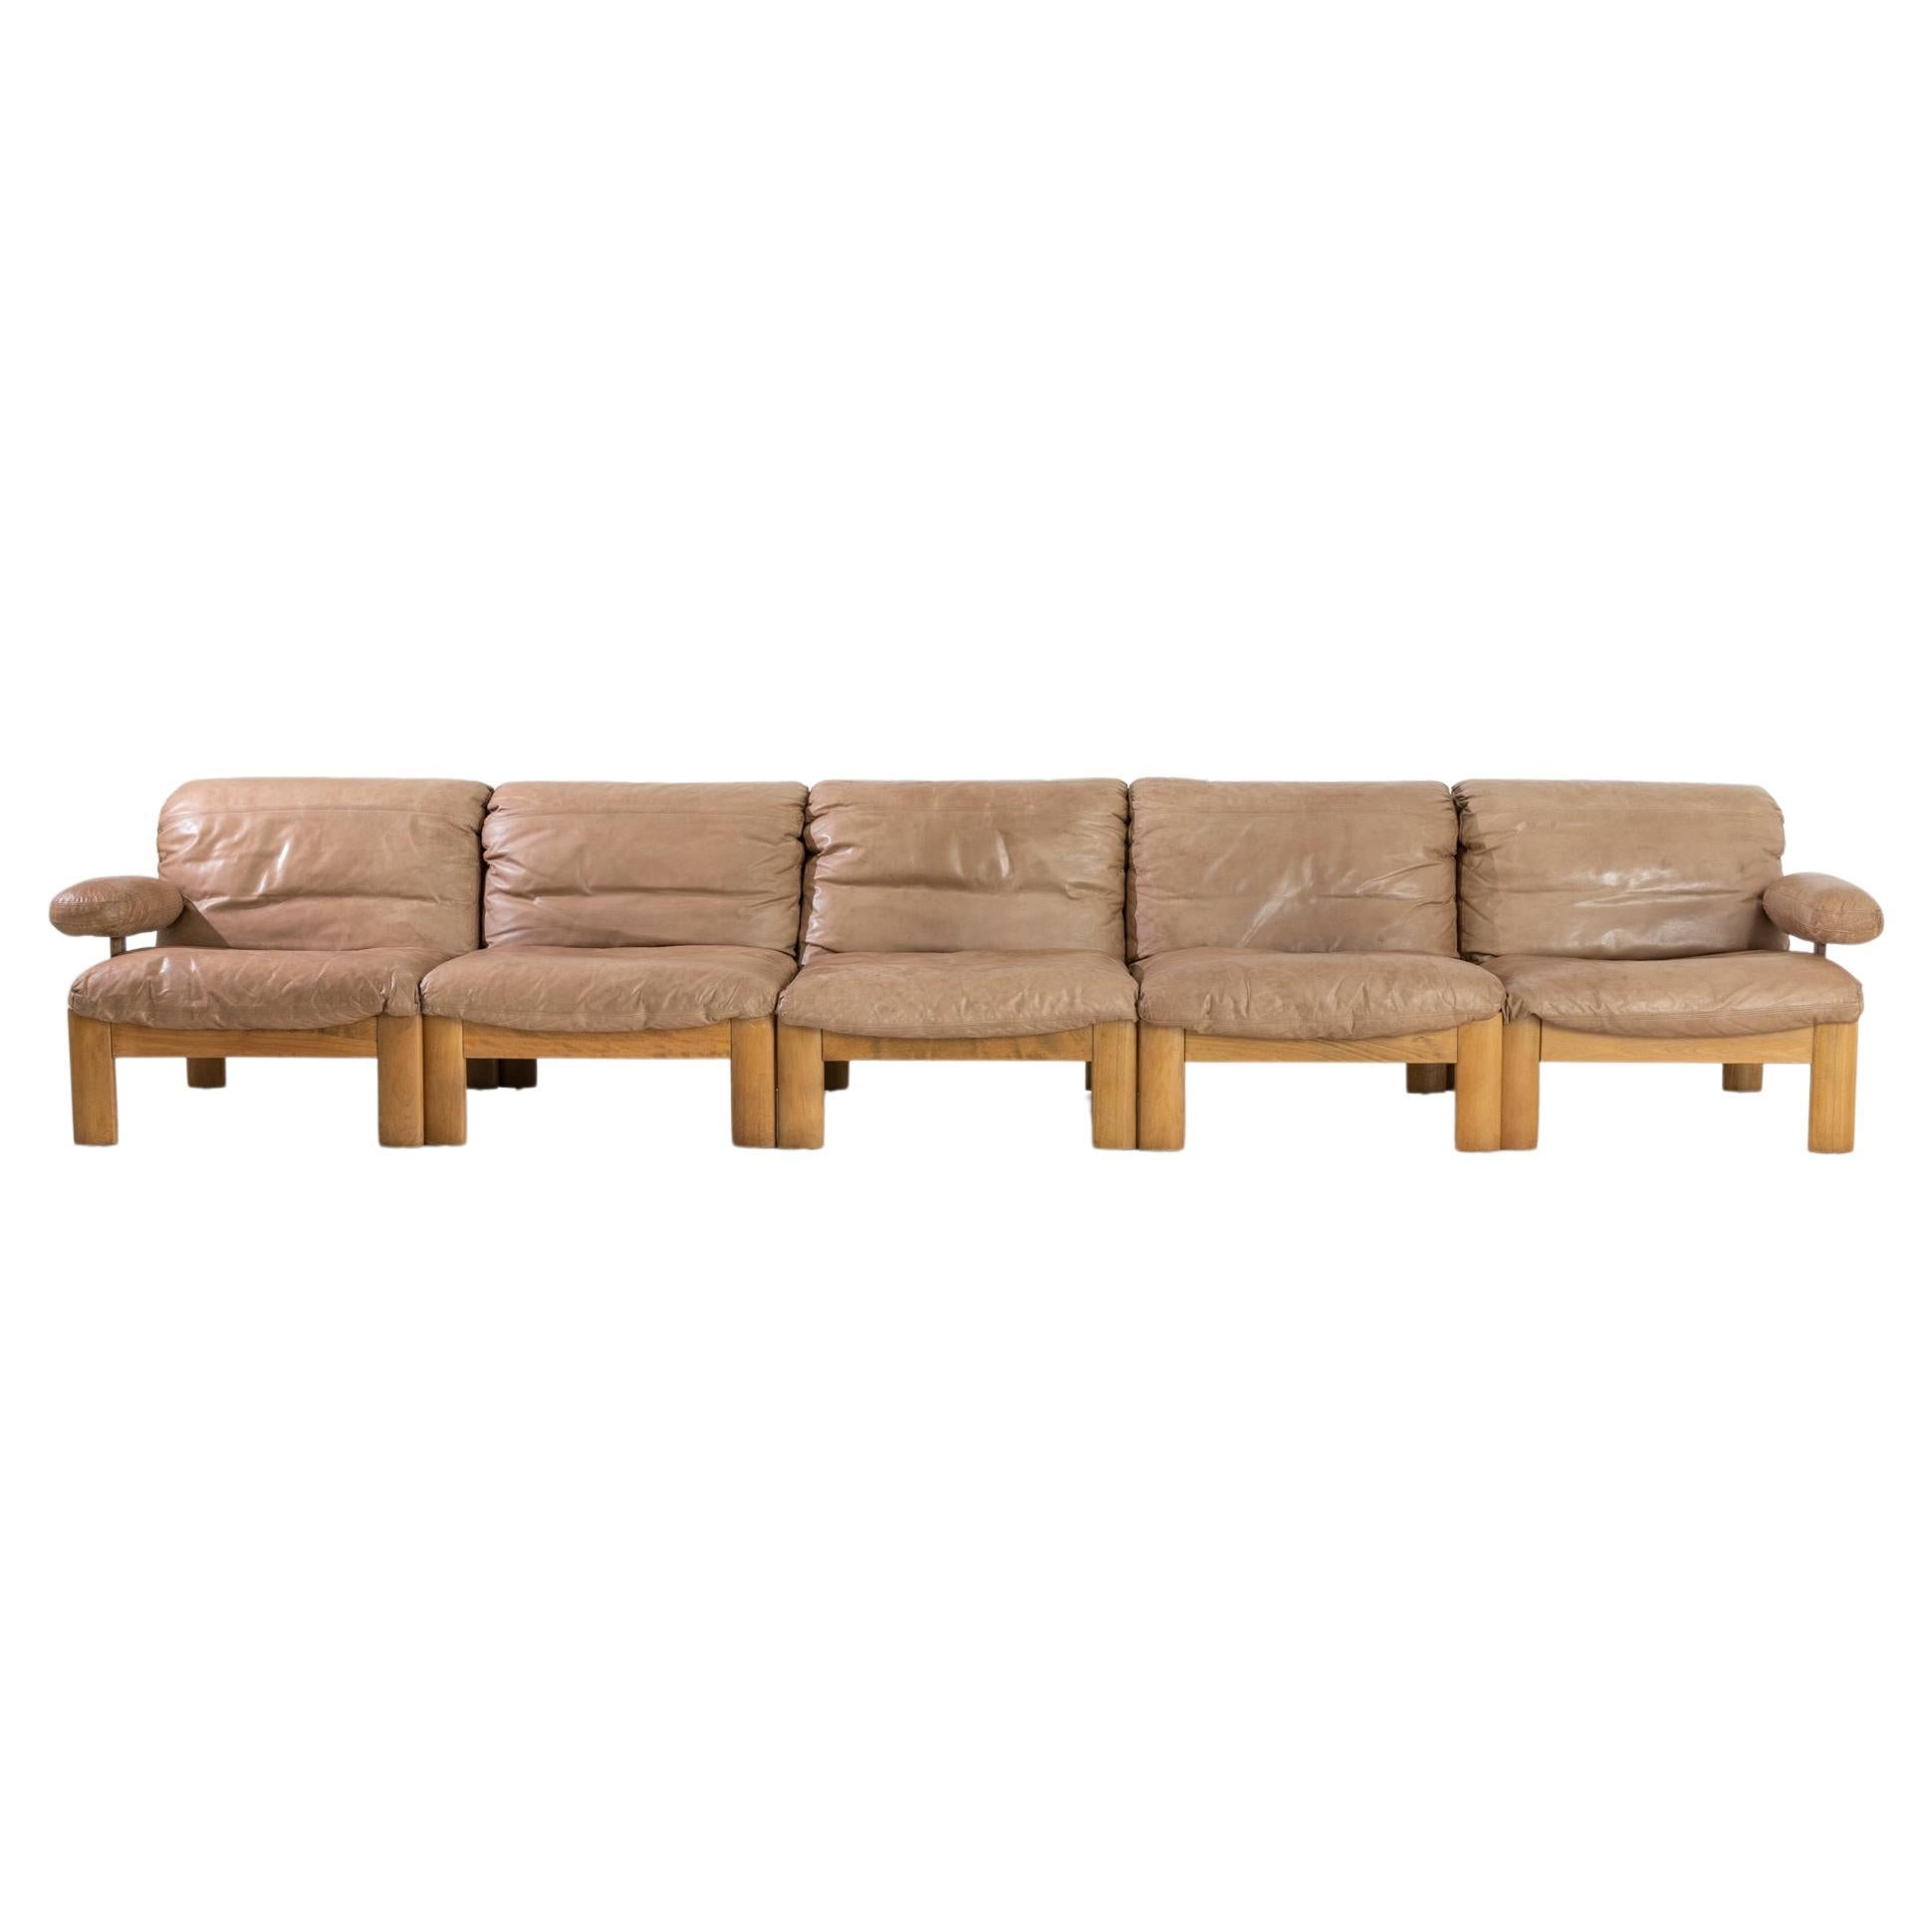 20th Century German Modular Leather Sofa, Set of Five